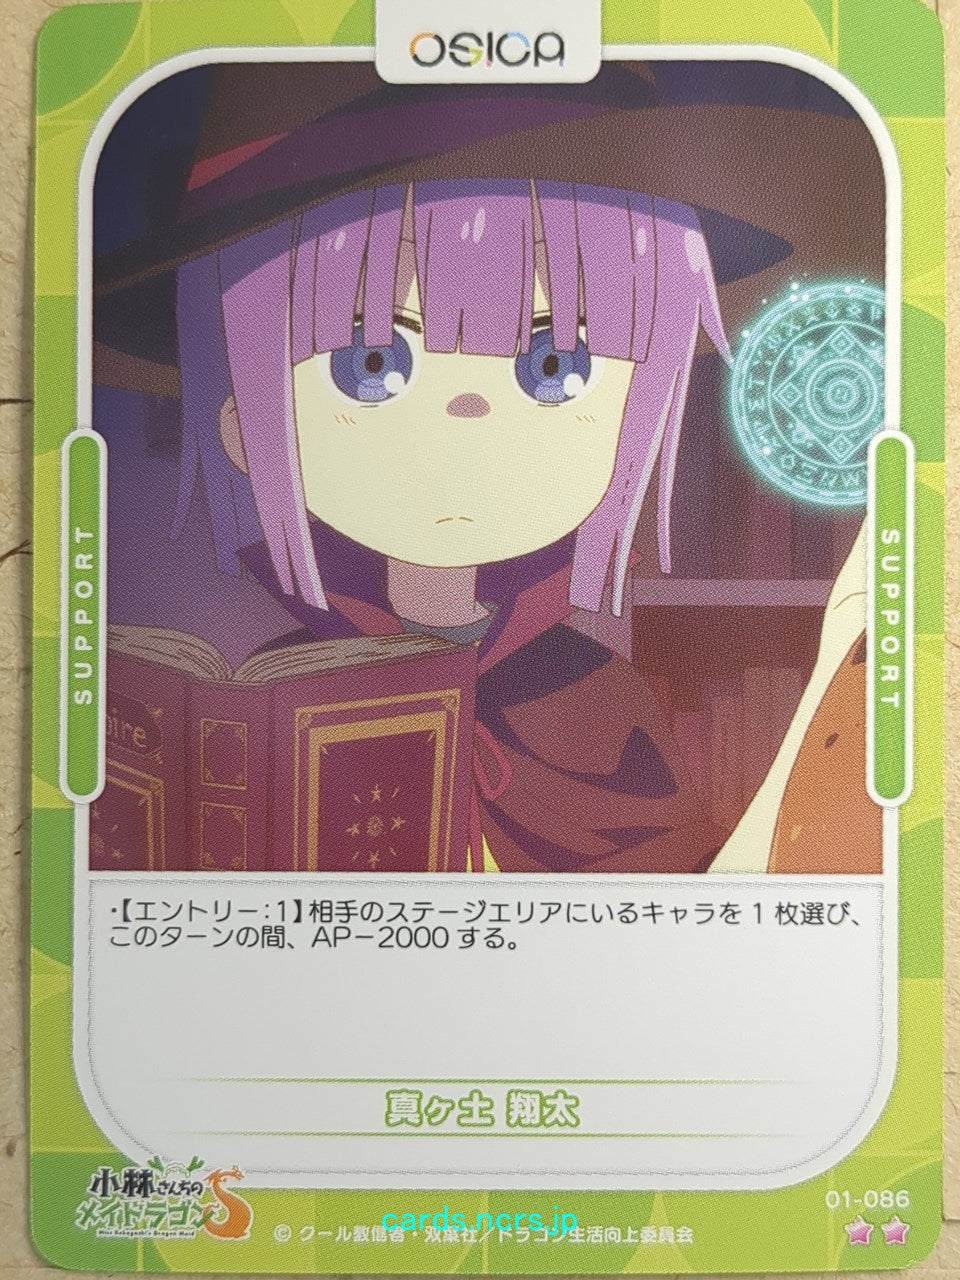 OSICA Miss Kobayashi's Dragon Maid -Shouta Magatsuchi-   Trading Card OS/KOB-01-086